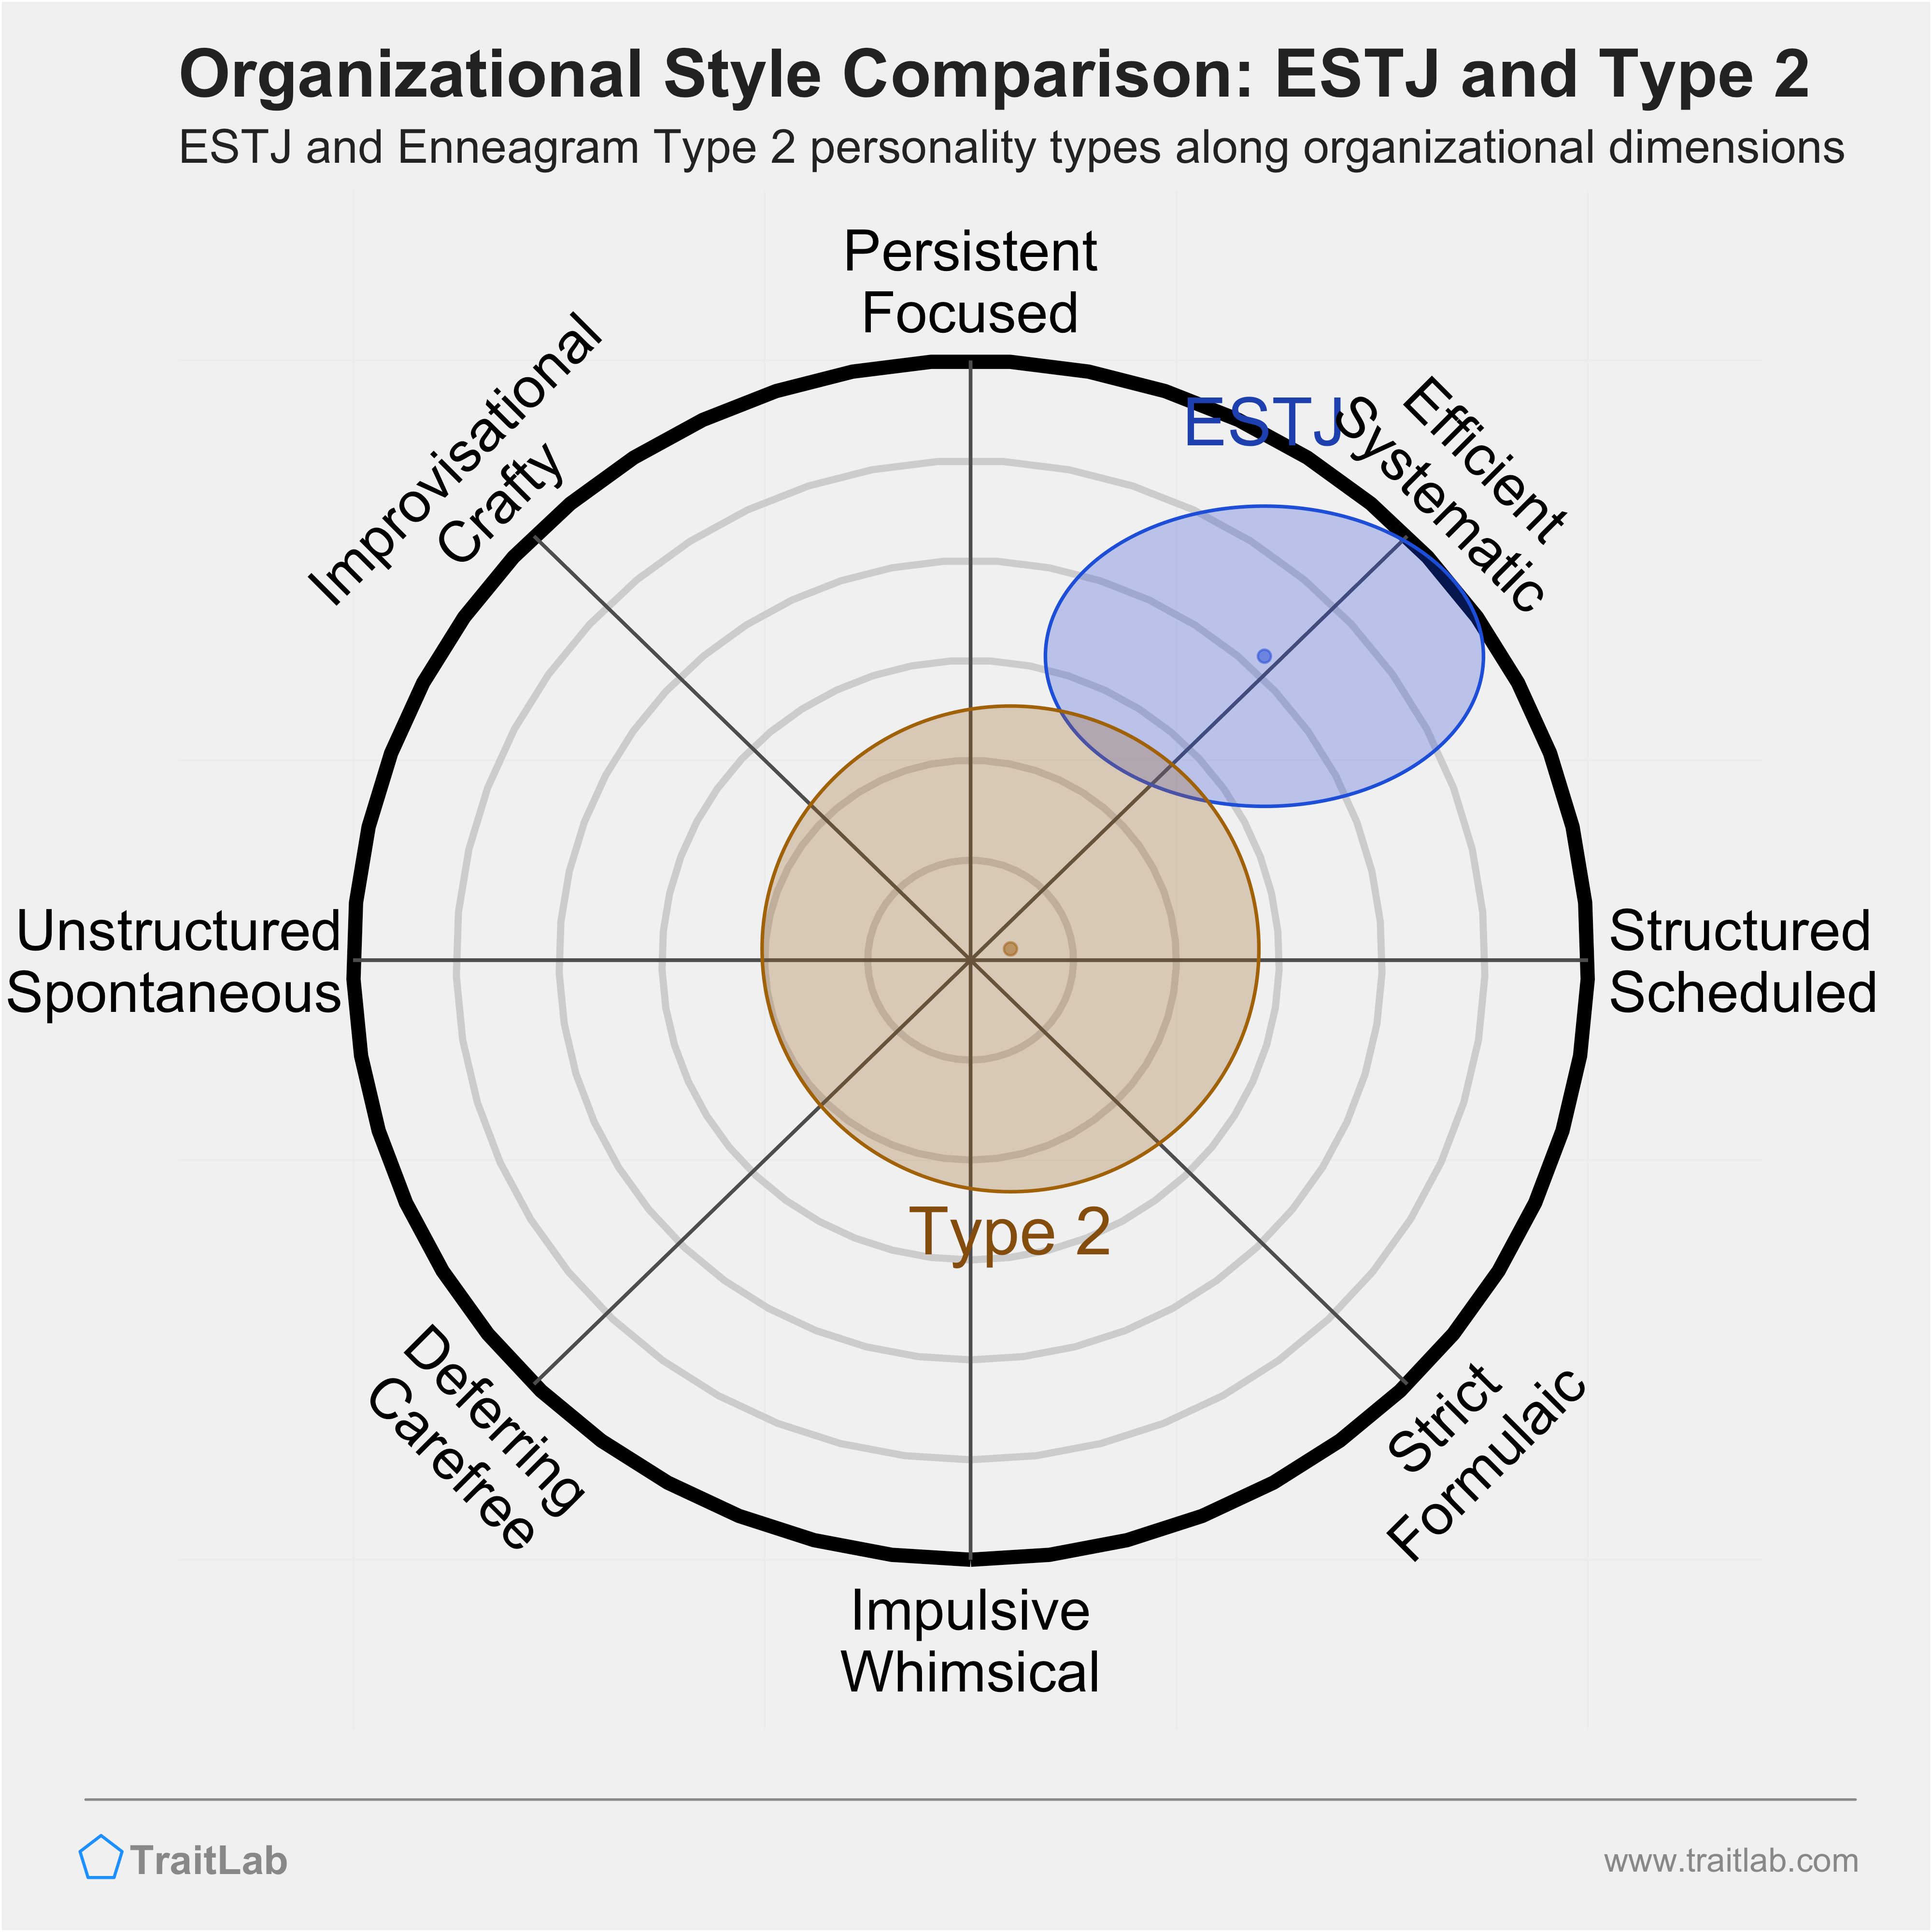 ESTJ and Type 2 comparison across organizational dimensions